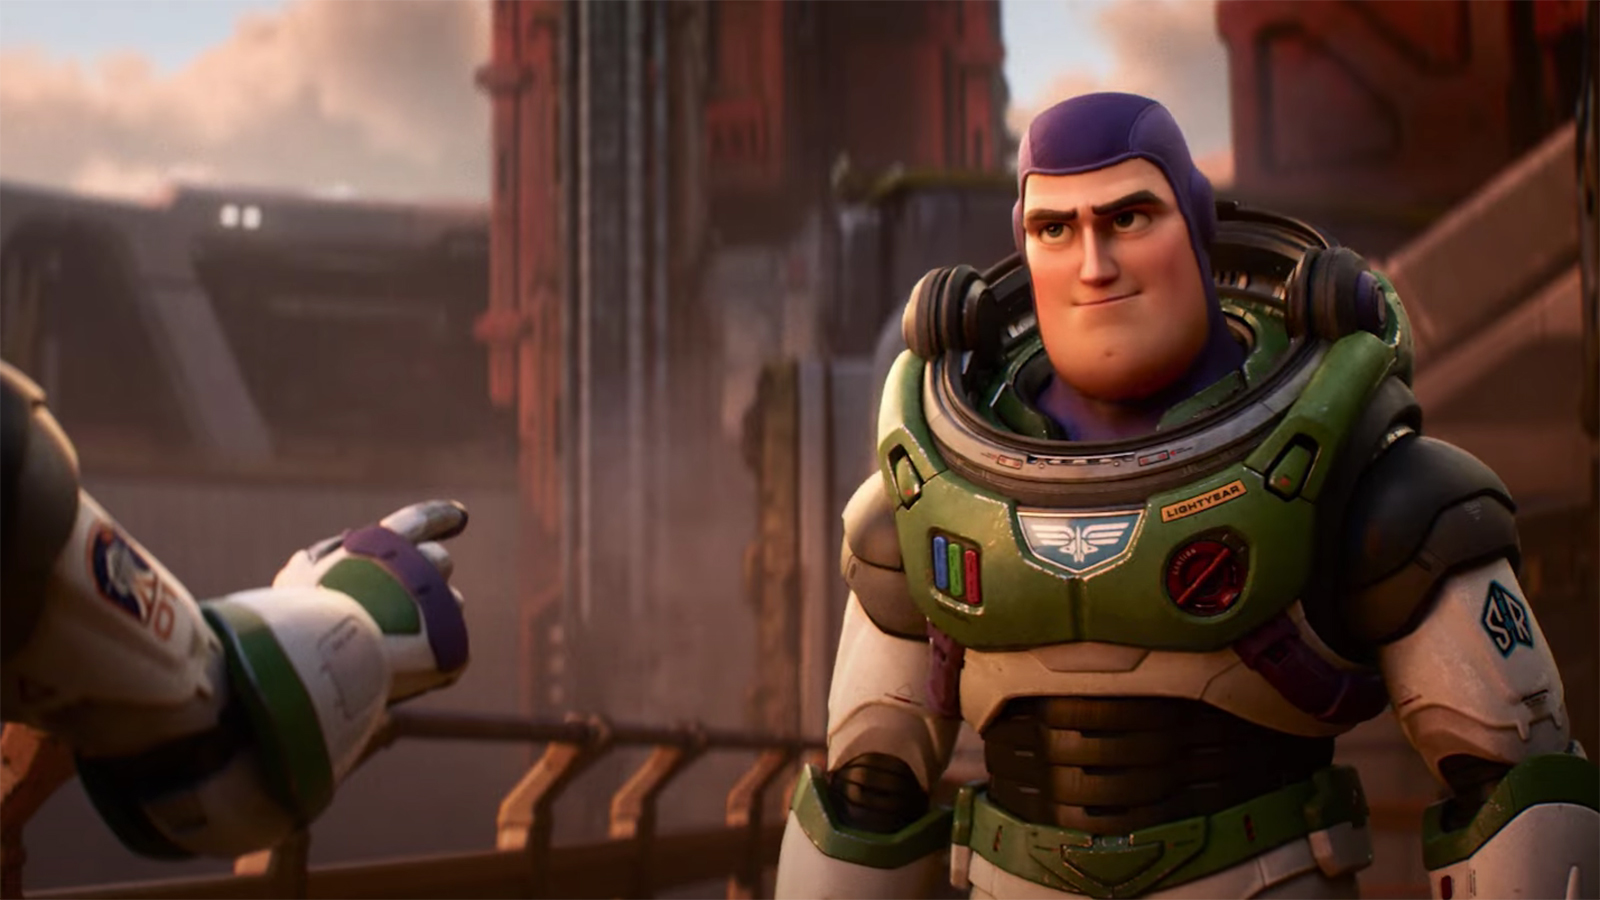 Lightyear' trailer: Pixar teases Buzz Lightyear's origin story in new trailer